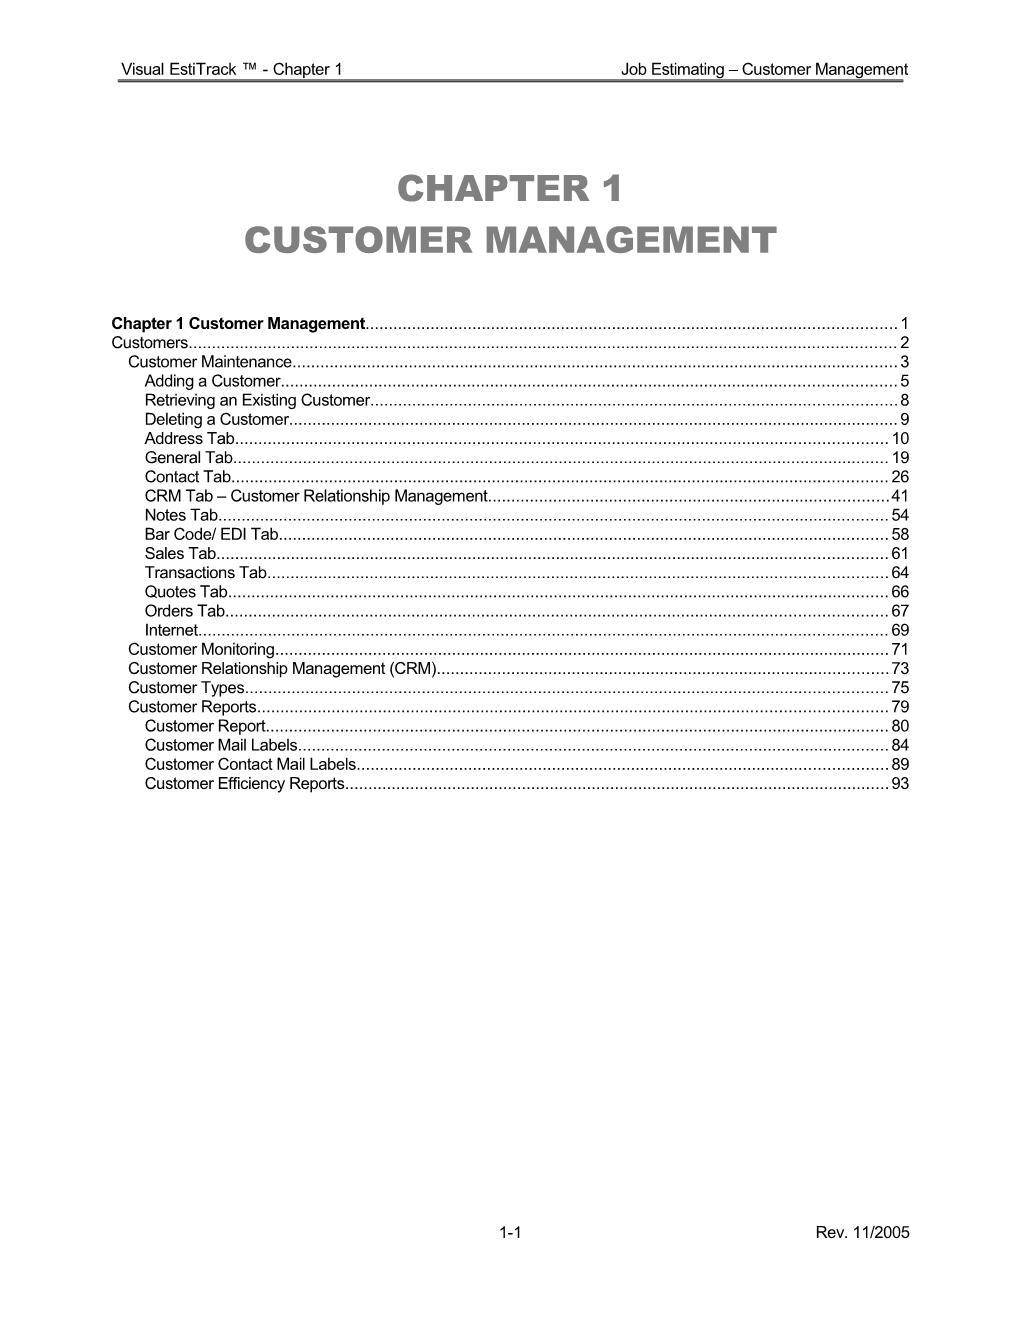 Chapter 1Customer Management